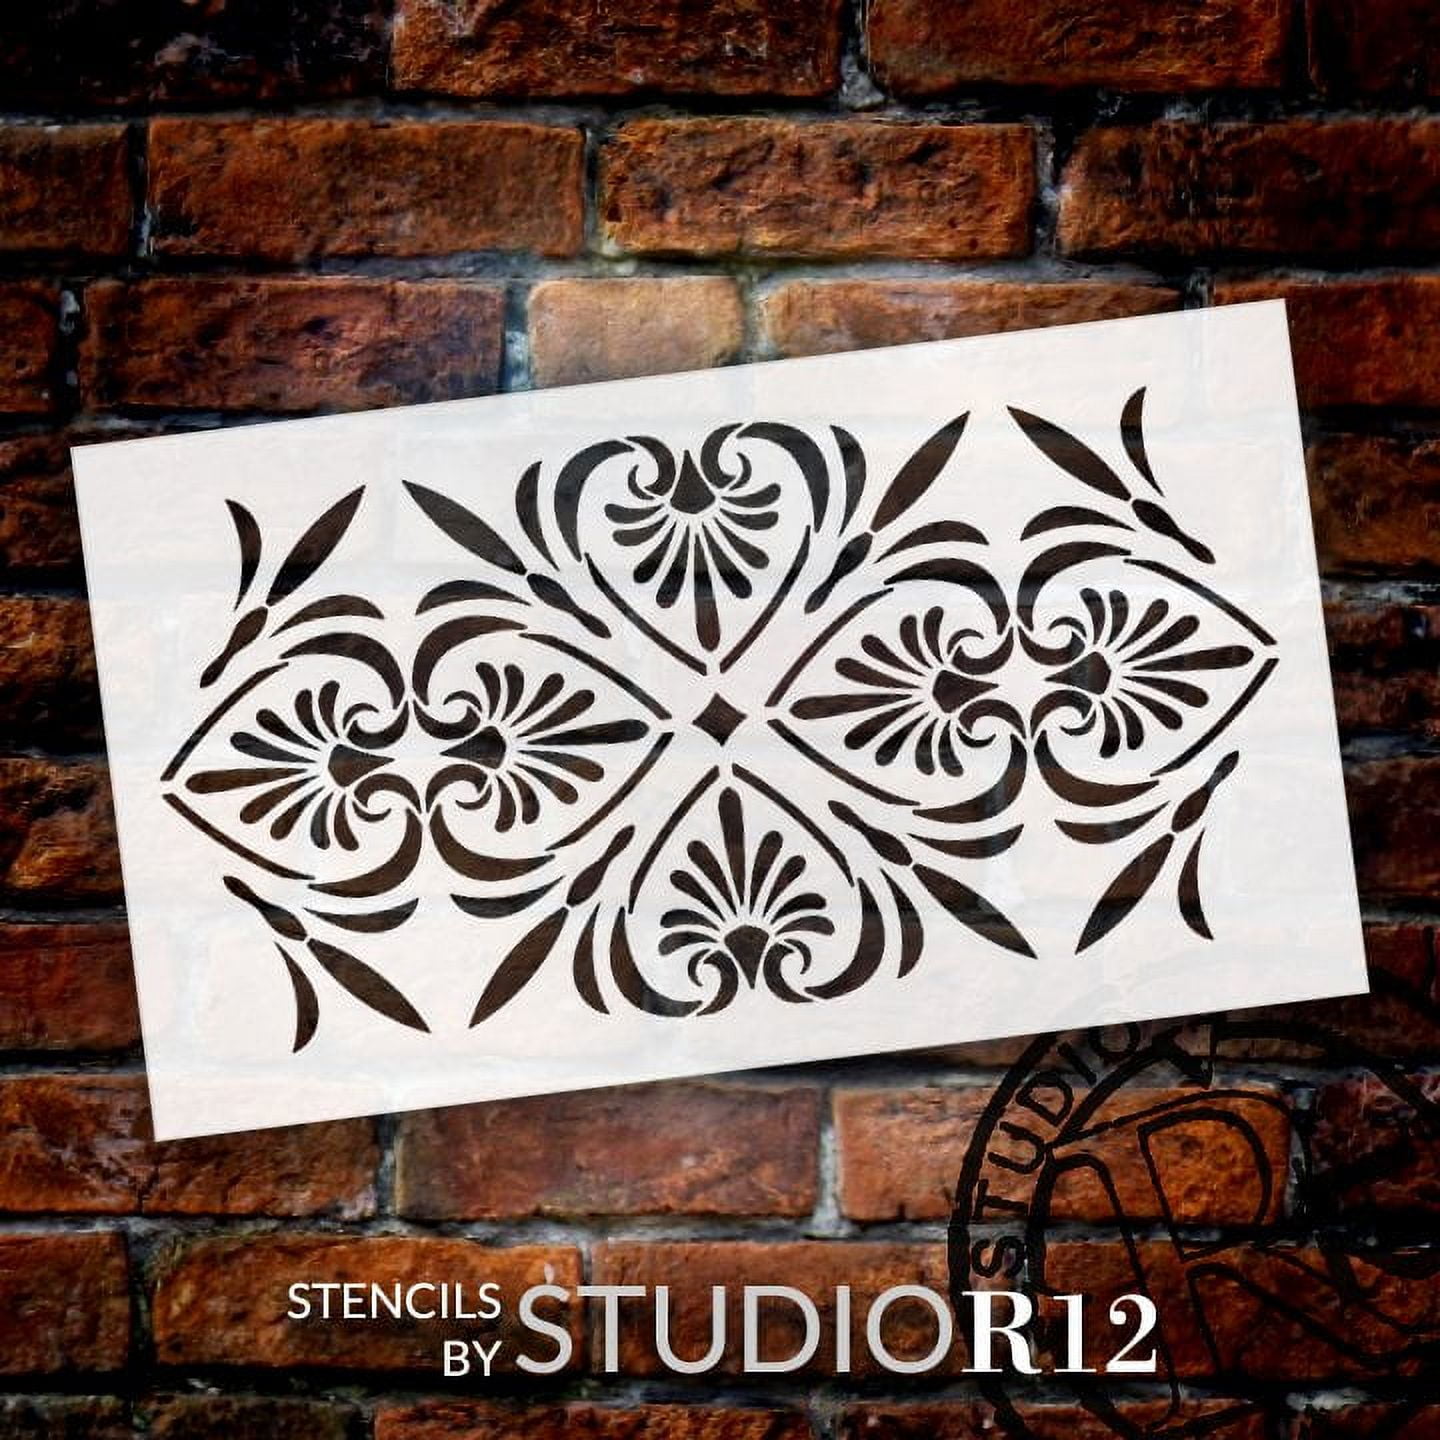 Stencil MiNiS - Leaf Border Stencil, stencils for furniture, crafts &  DIY 10534